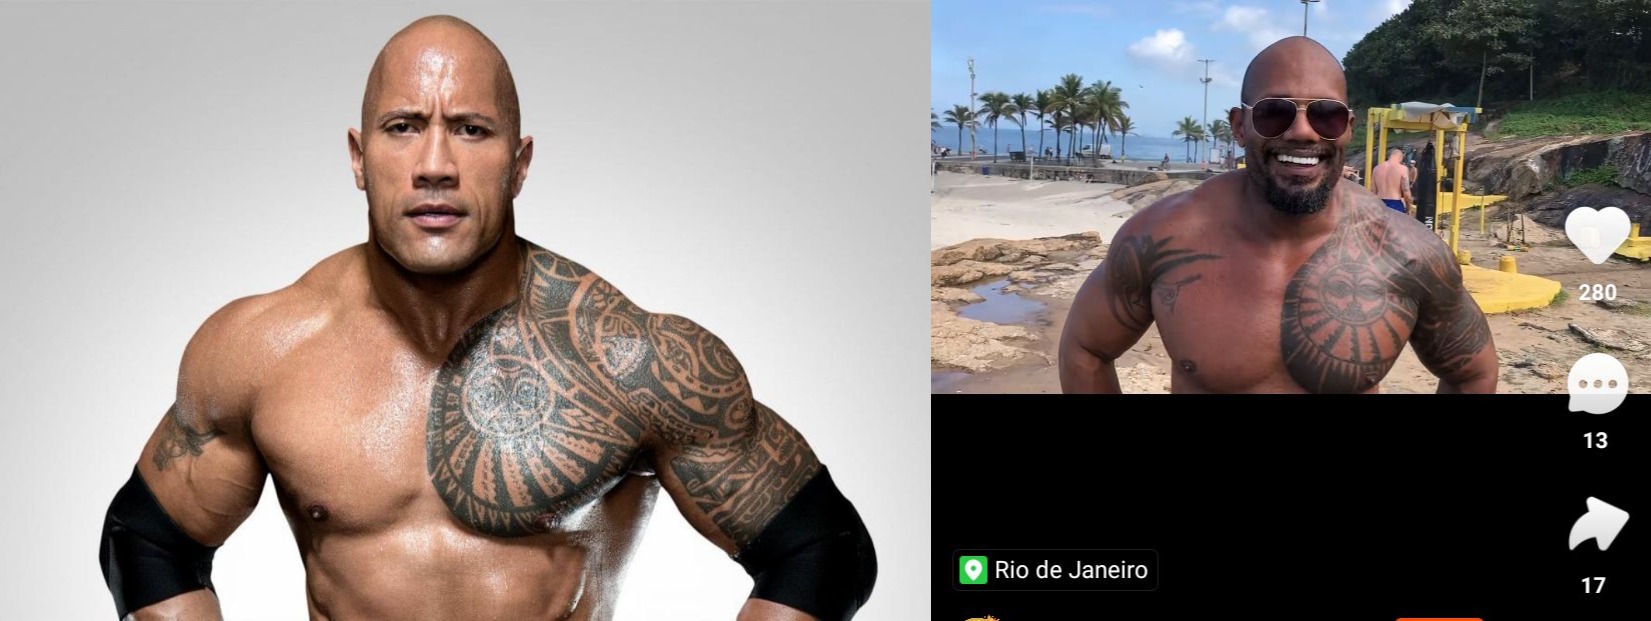 Meet The Brazilian Man That Looks Exactly Like Actor The Rock(photos) -  Romance - Nigeria